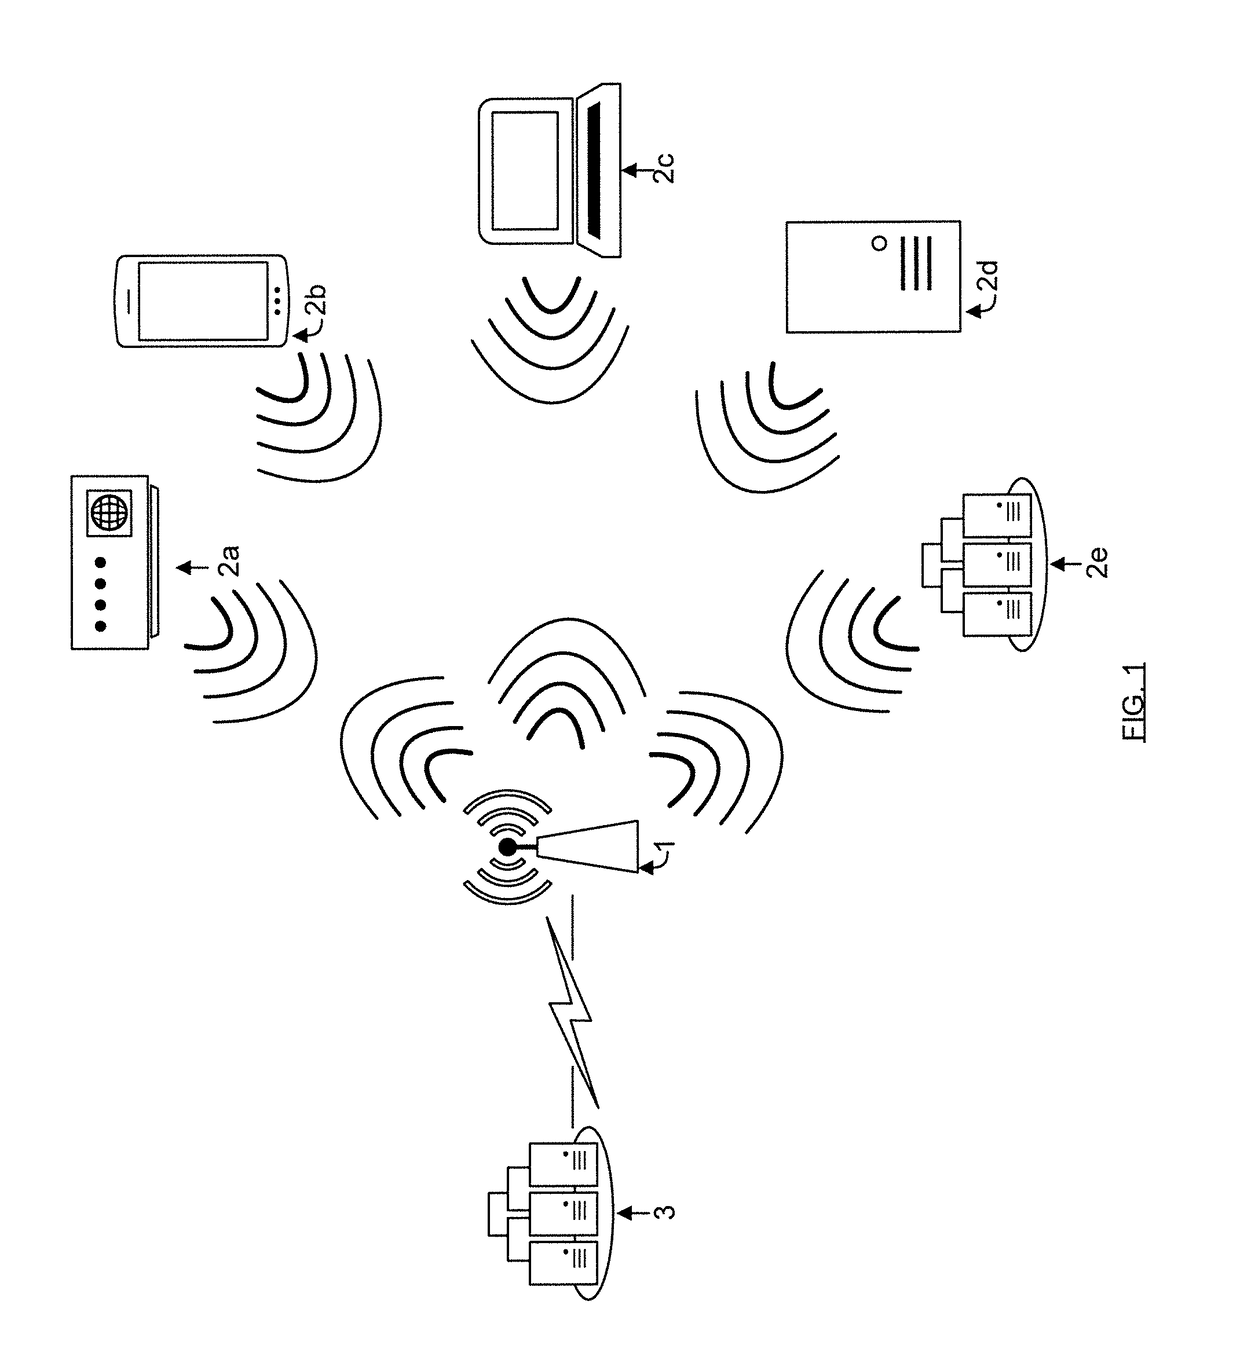 Antenna array based oam wireless communication